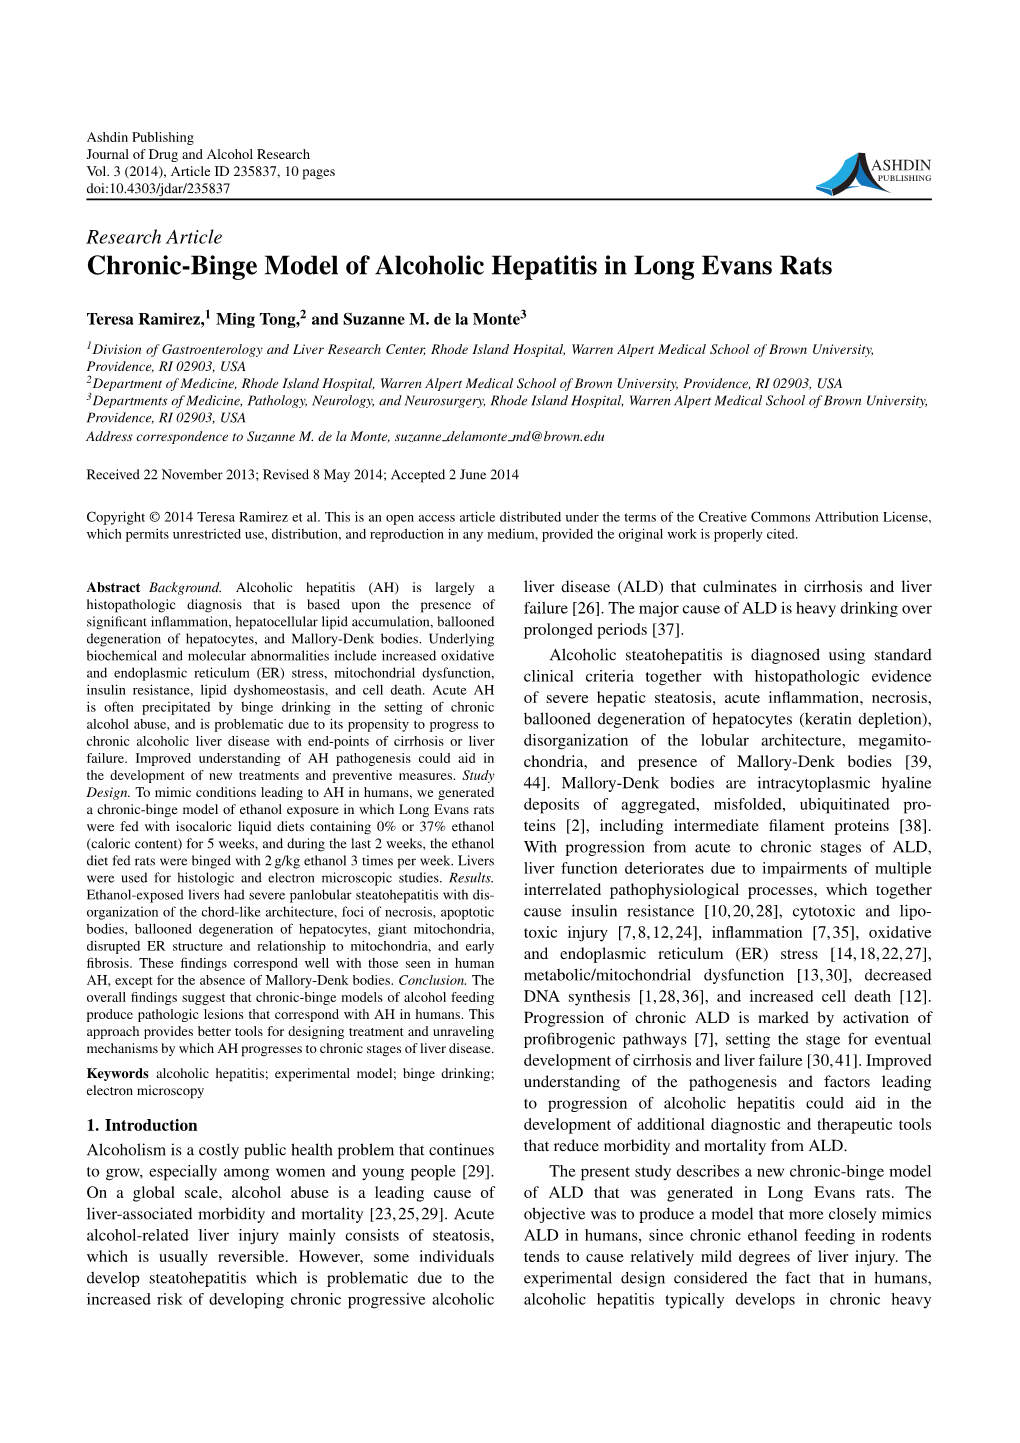 Chronic-Binge Model of Alcoholic Hepatitis in Long Evans Rats